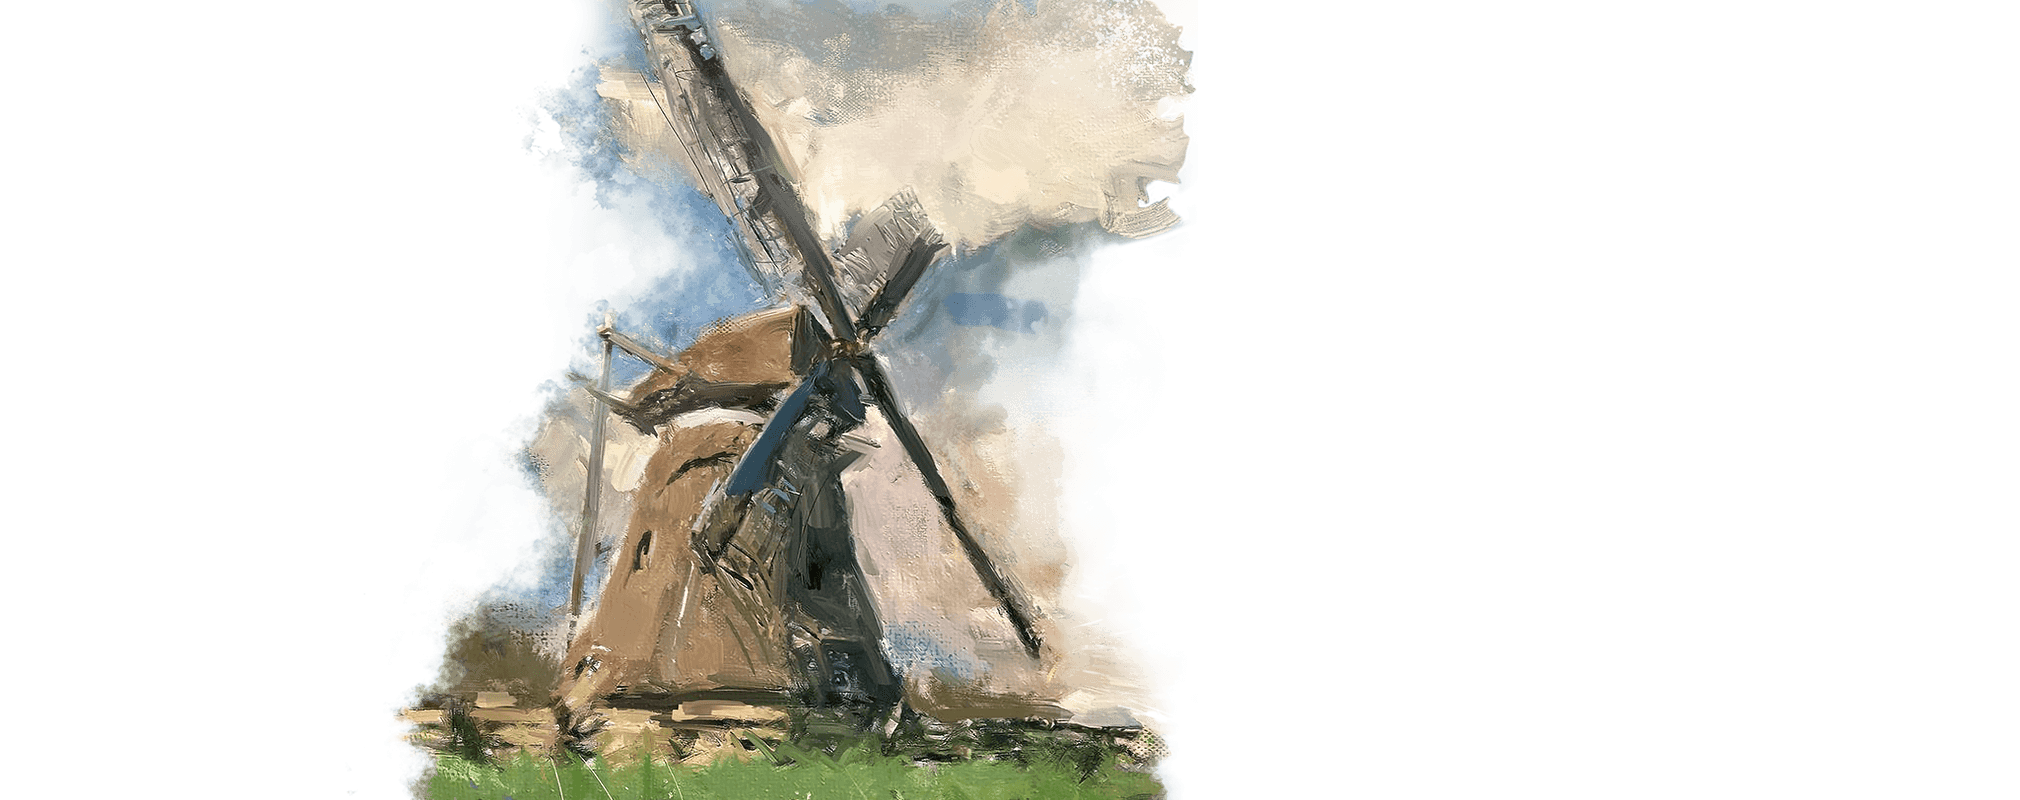 Digital Art Painting Software Corel Painter 2021